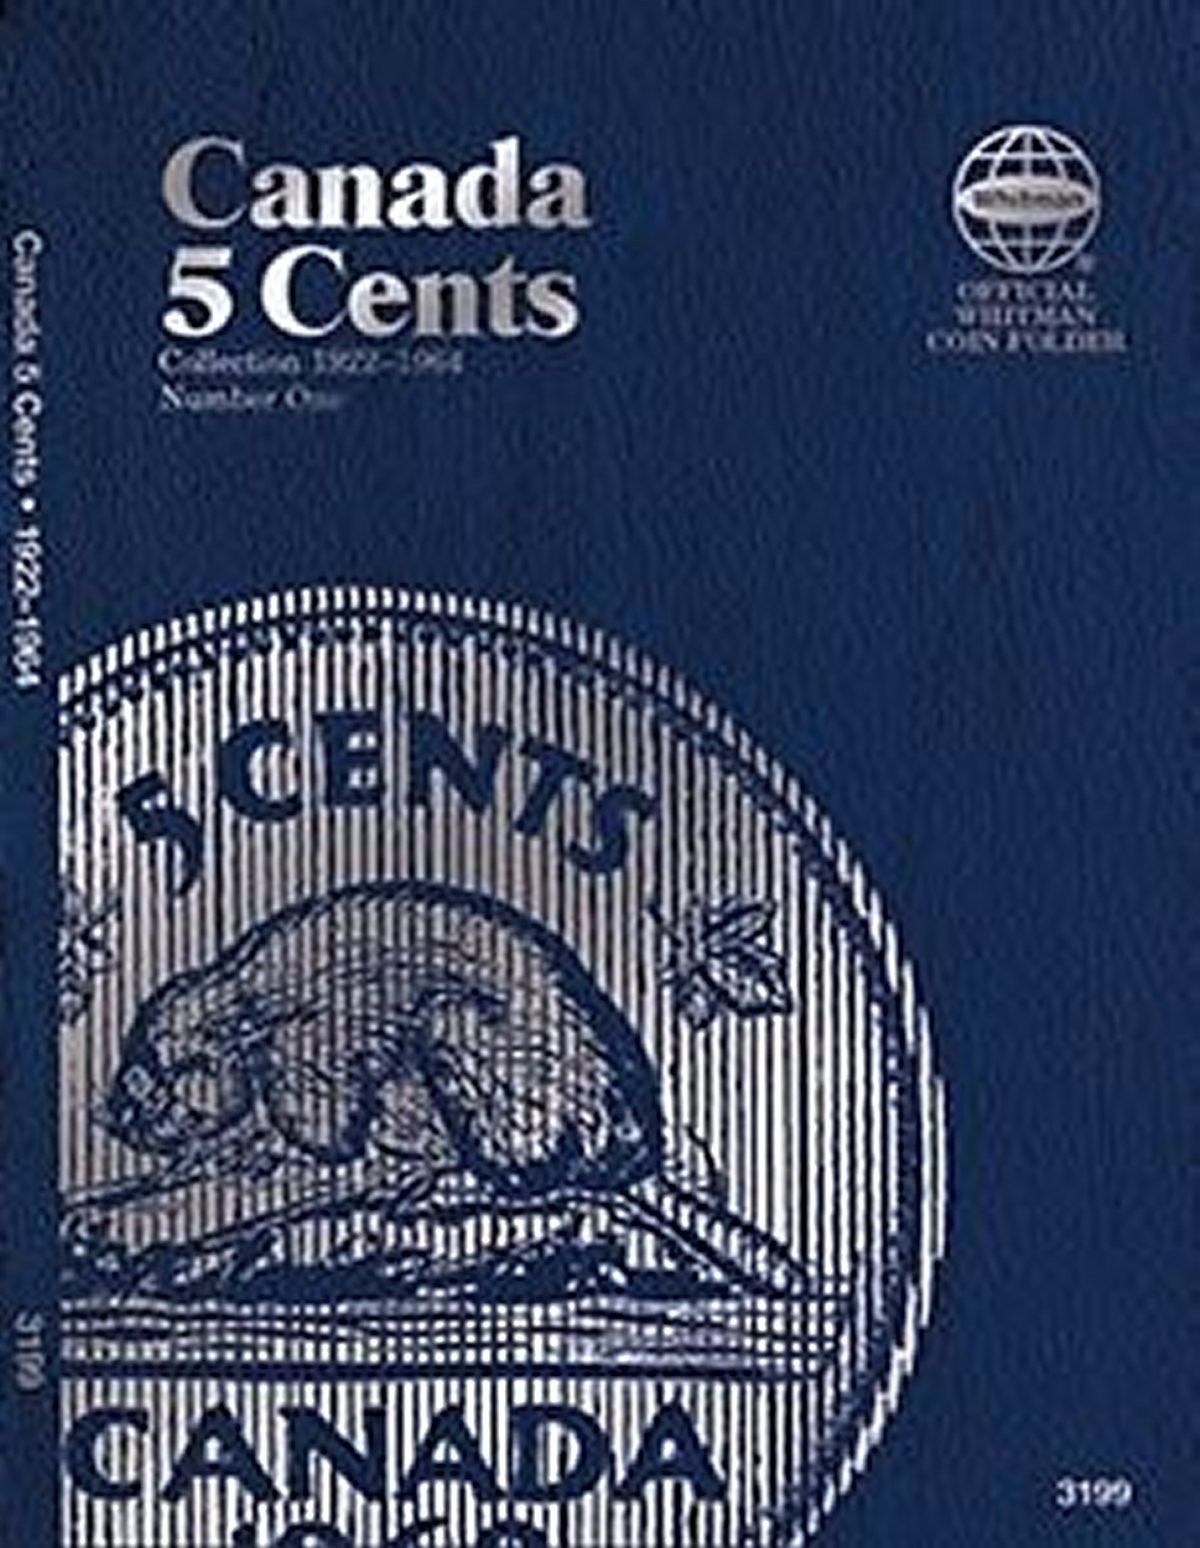 Whitman Coin Folder 3199 CANADA 5 Cents 1922-1964 Volume 1